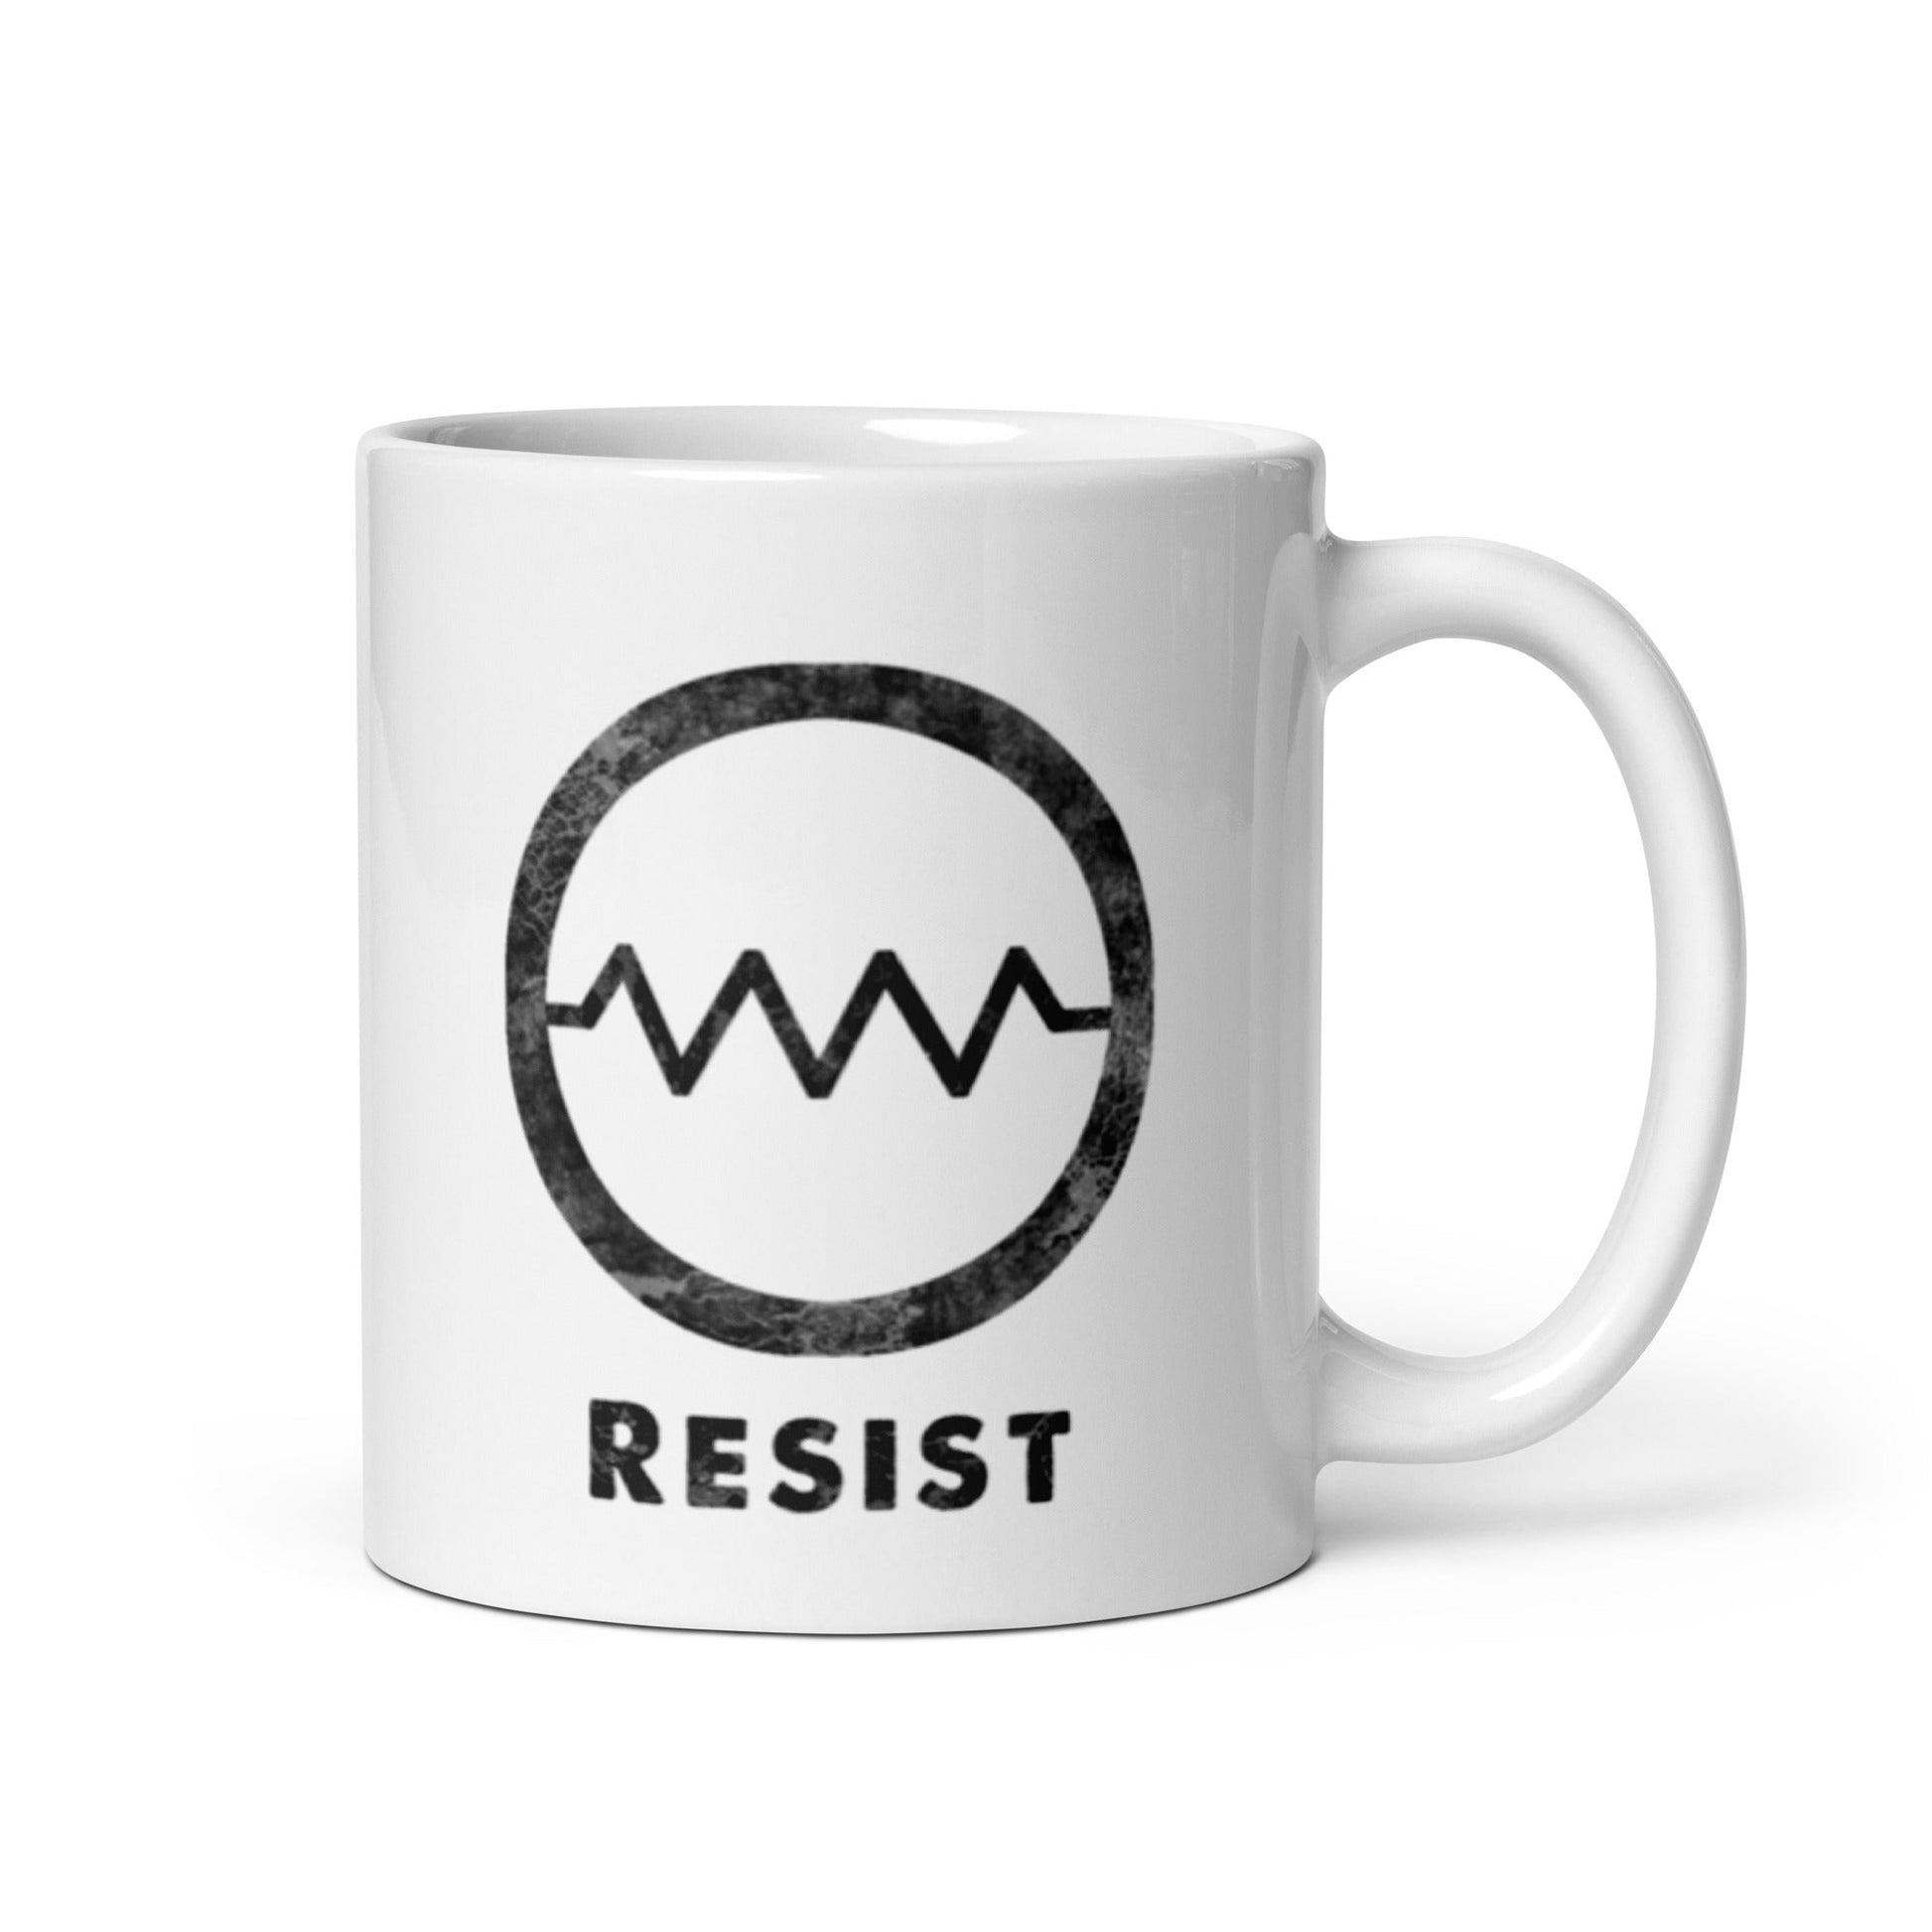 Resist - glossy mug - Souled Out World